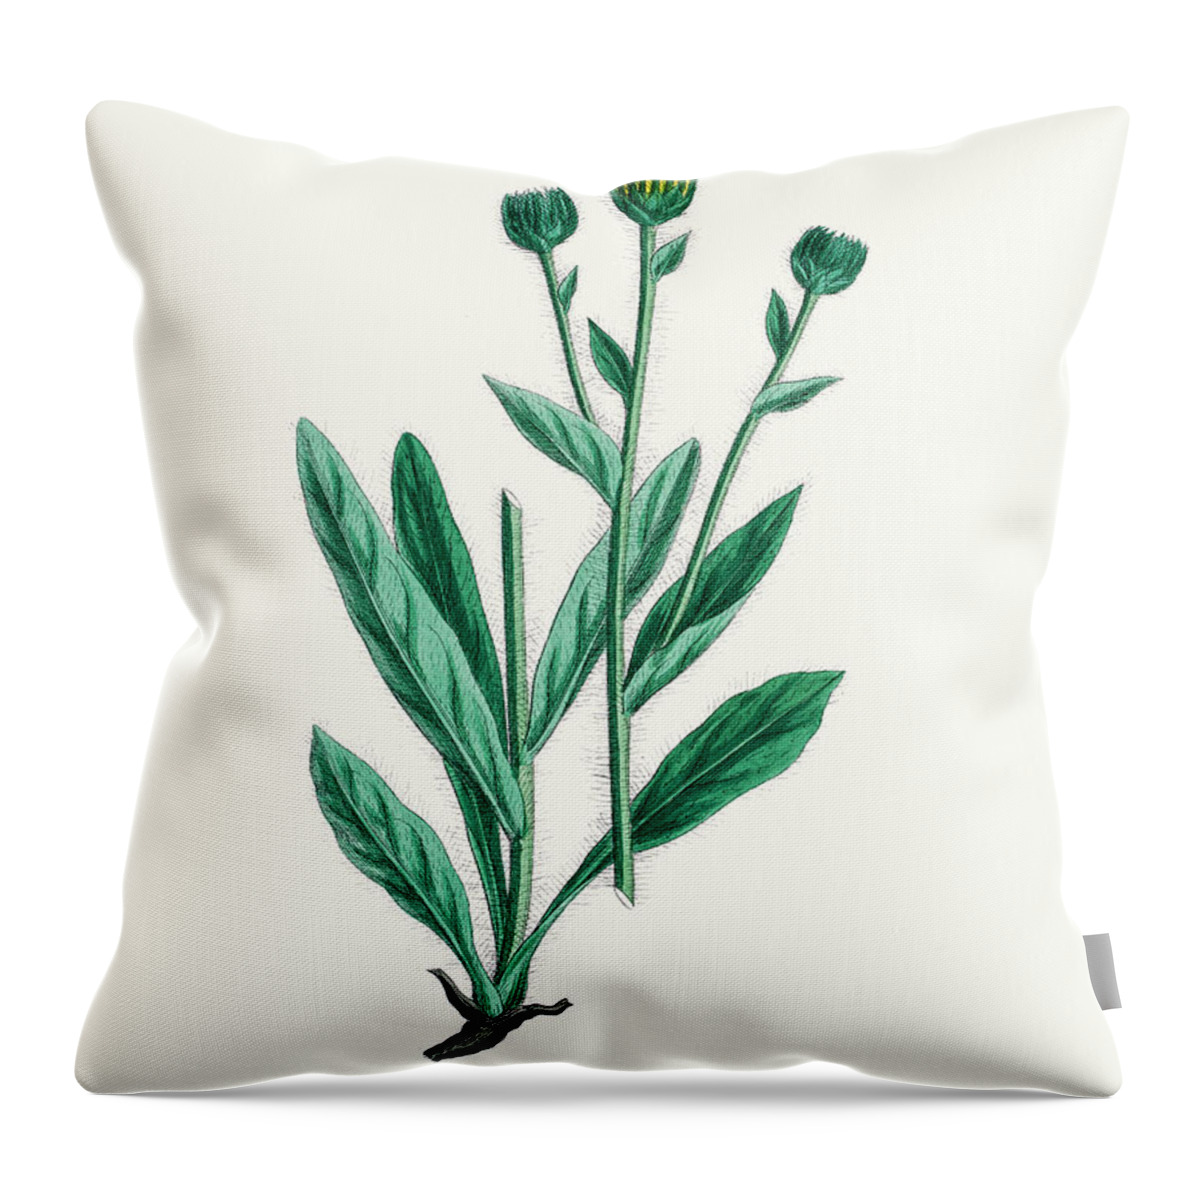 Art Throw Pillow featuring the digital art Hawkweed Chicory Plant 19th Century by Mashuk